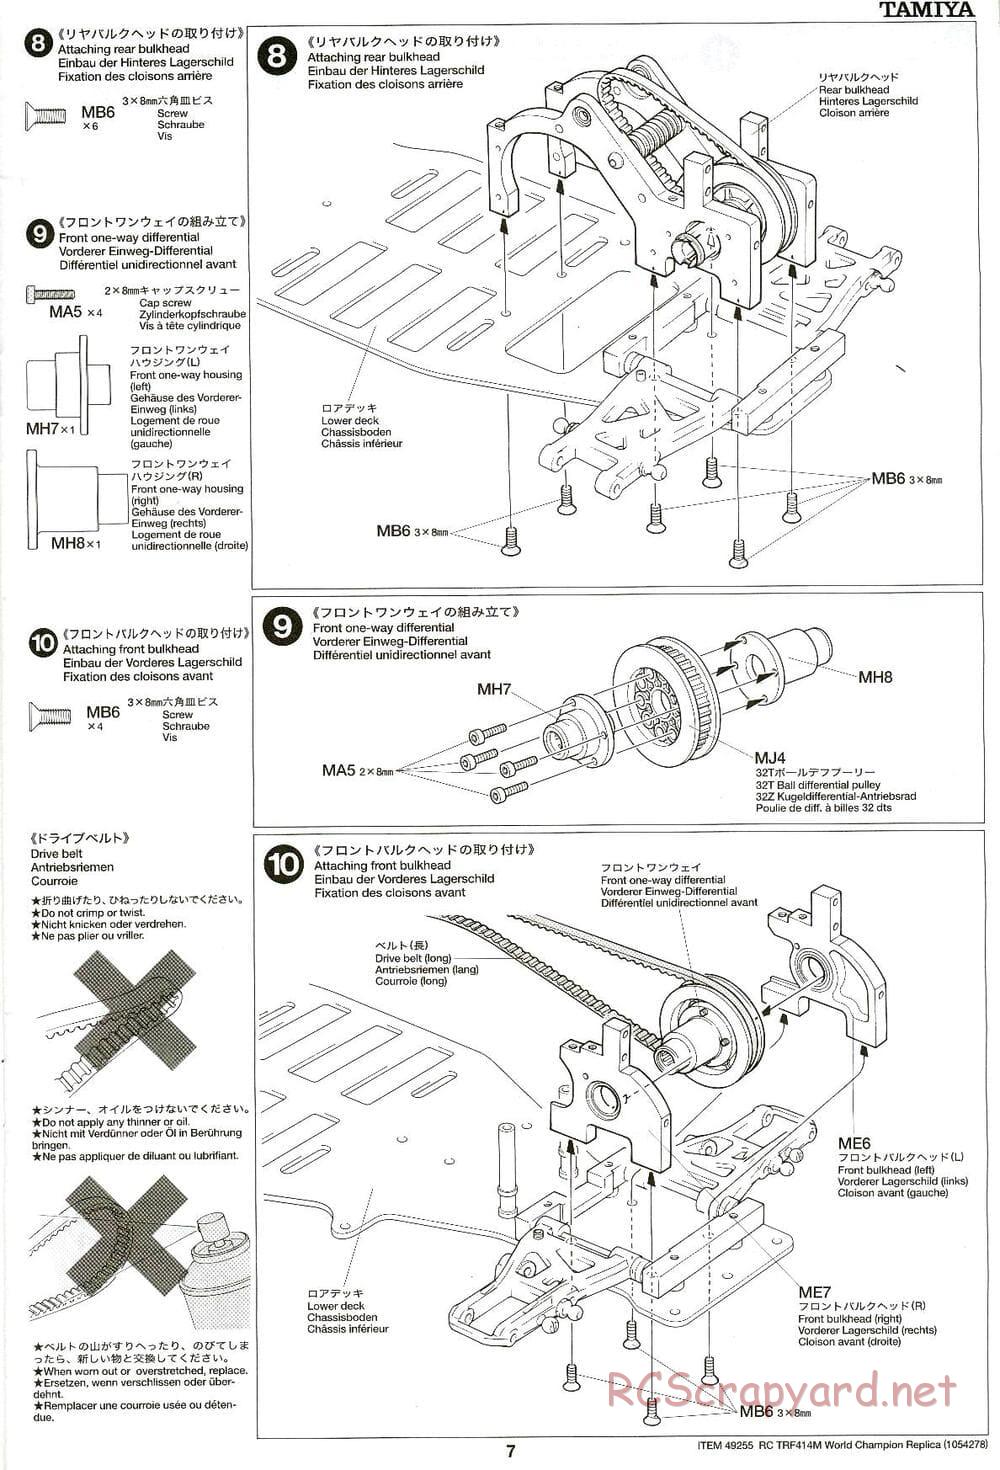 Tamiya - TRF414M World Champion Replica Chassis - Manual - Page 7